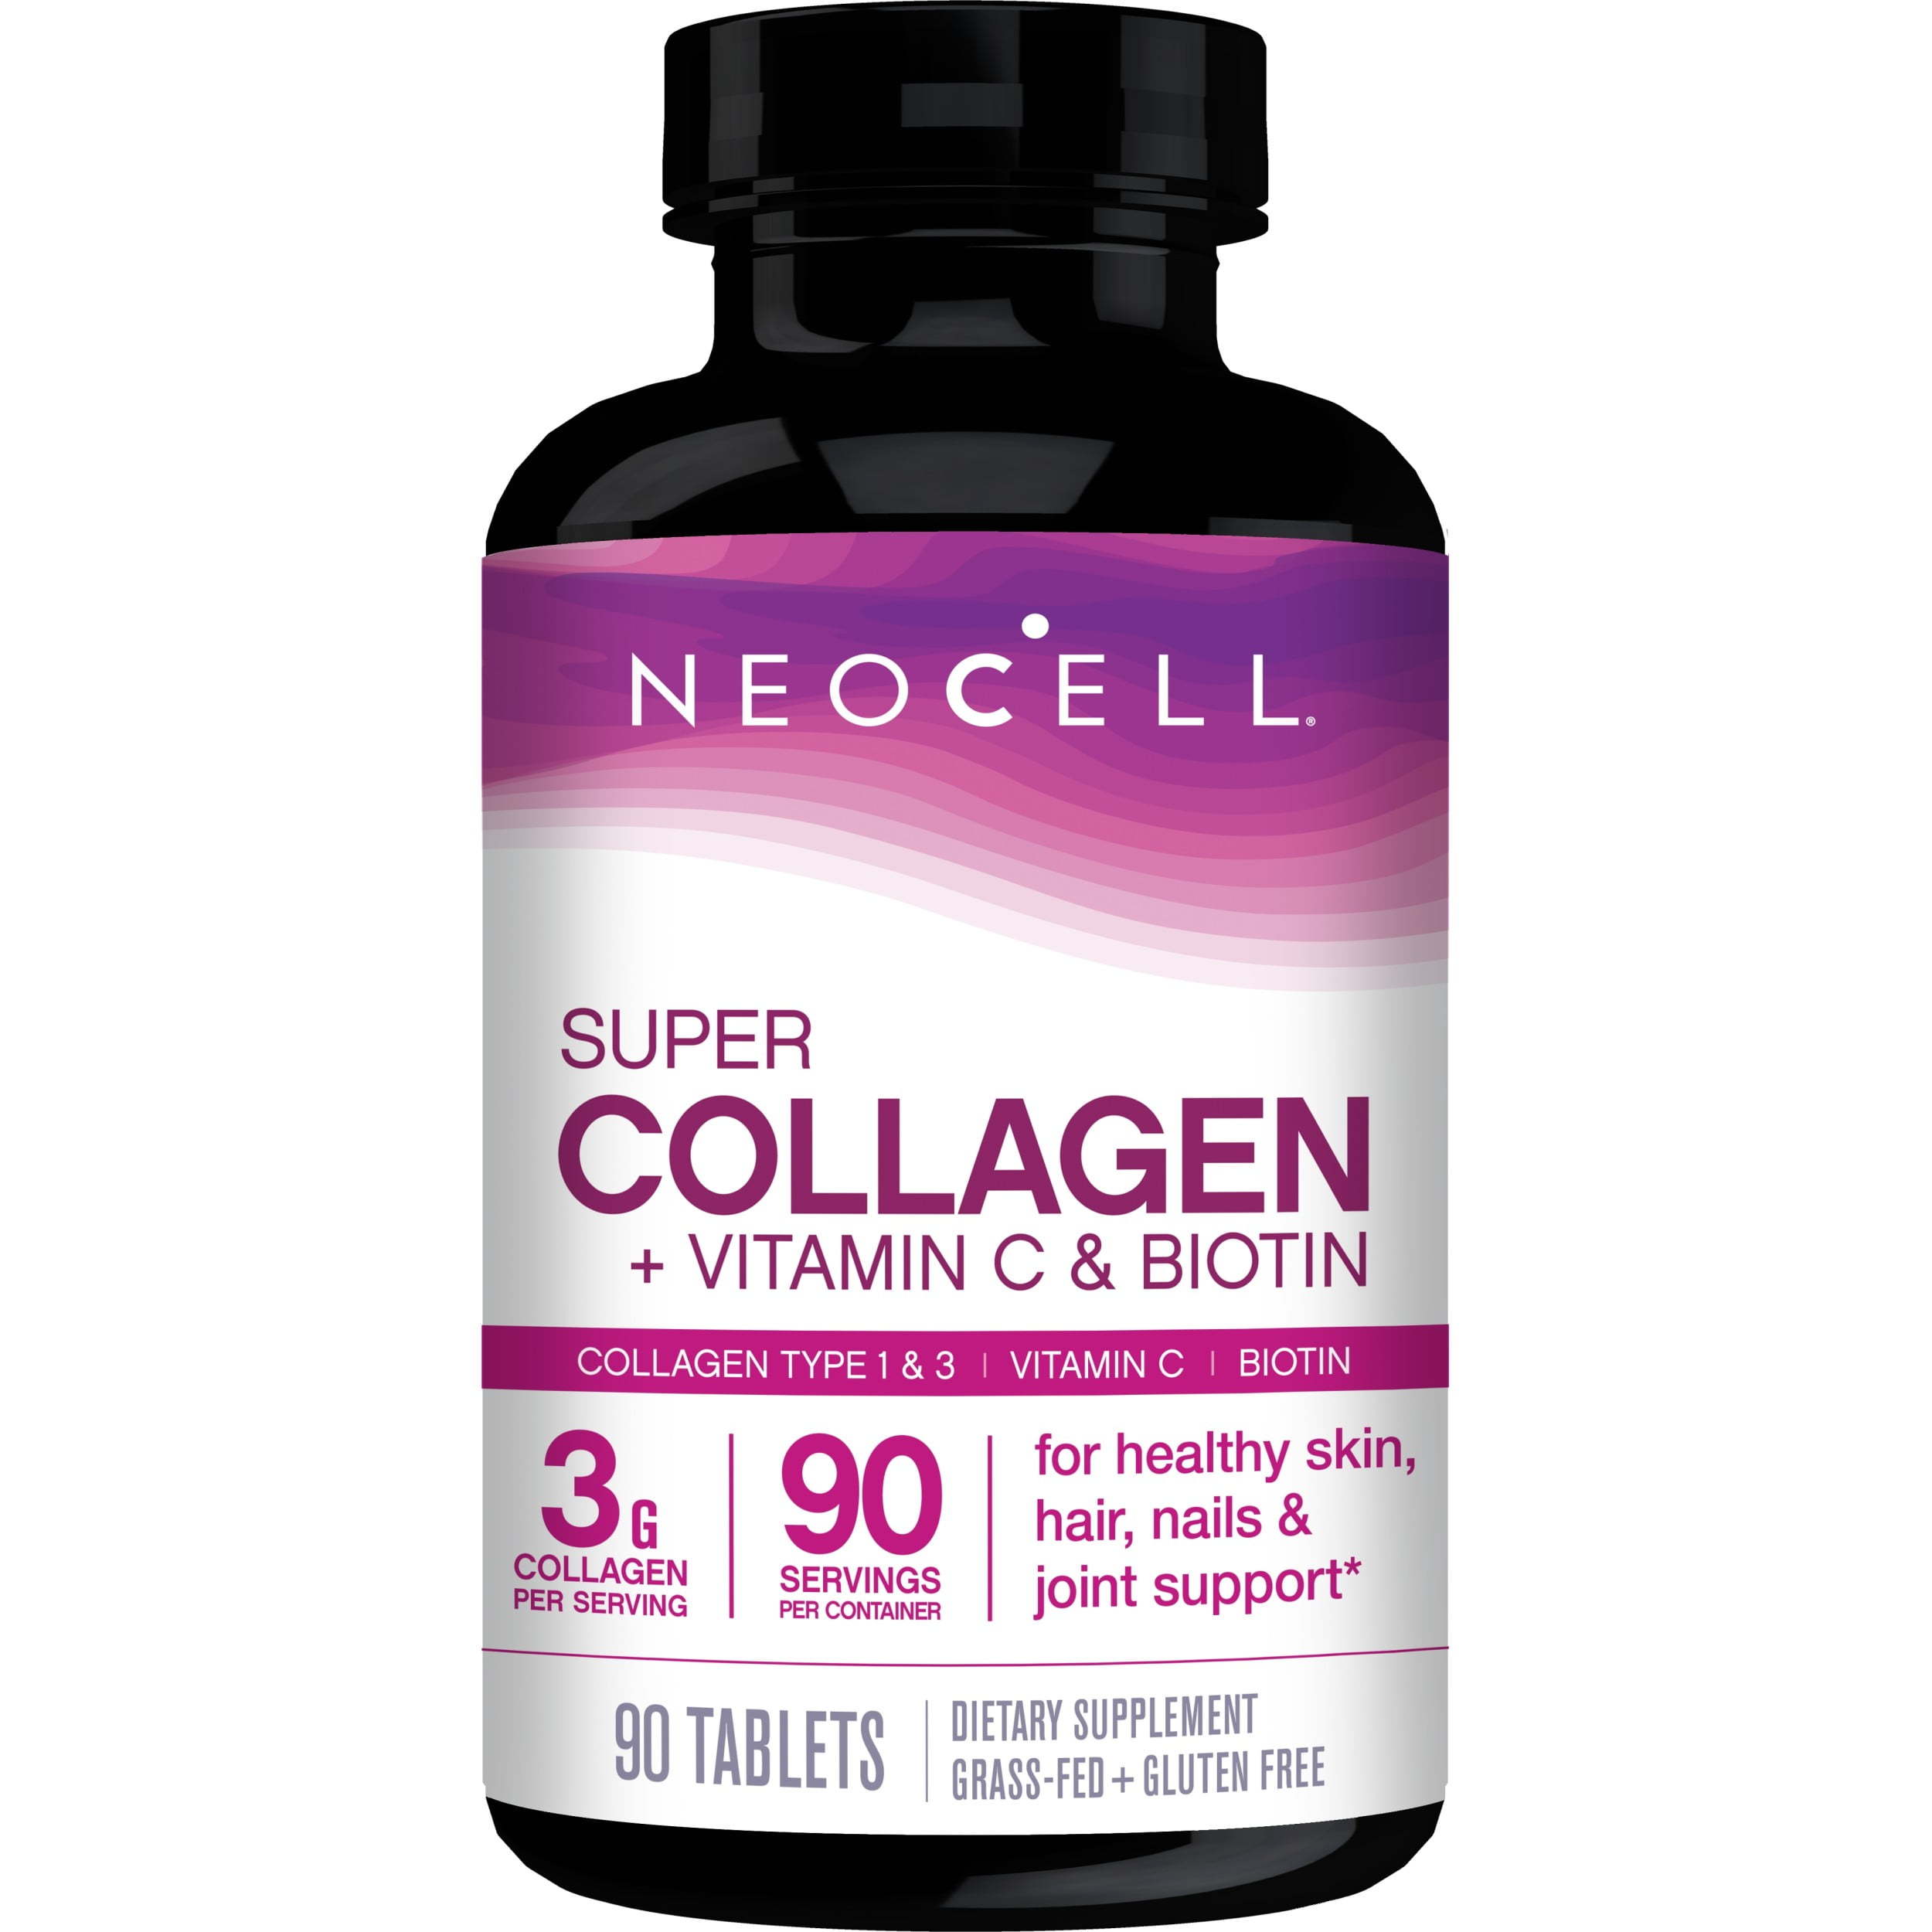 NeoCell Super Collagen + Vitamin C & Biotin, Dietary Supplement, Grass-Fed; 90 Tablets